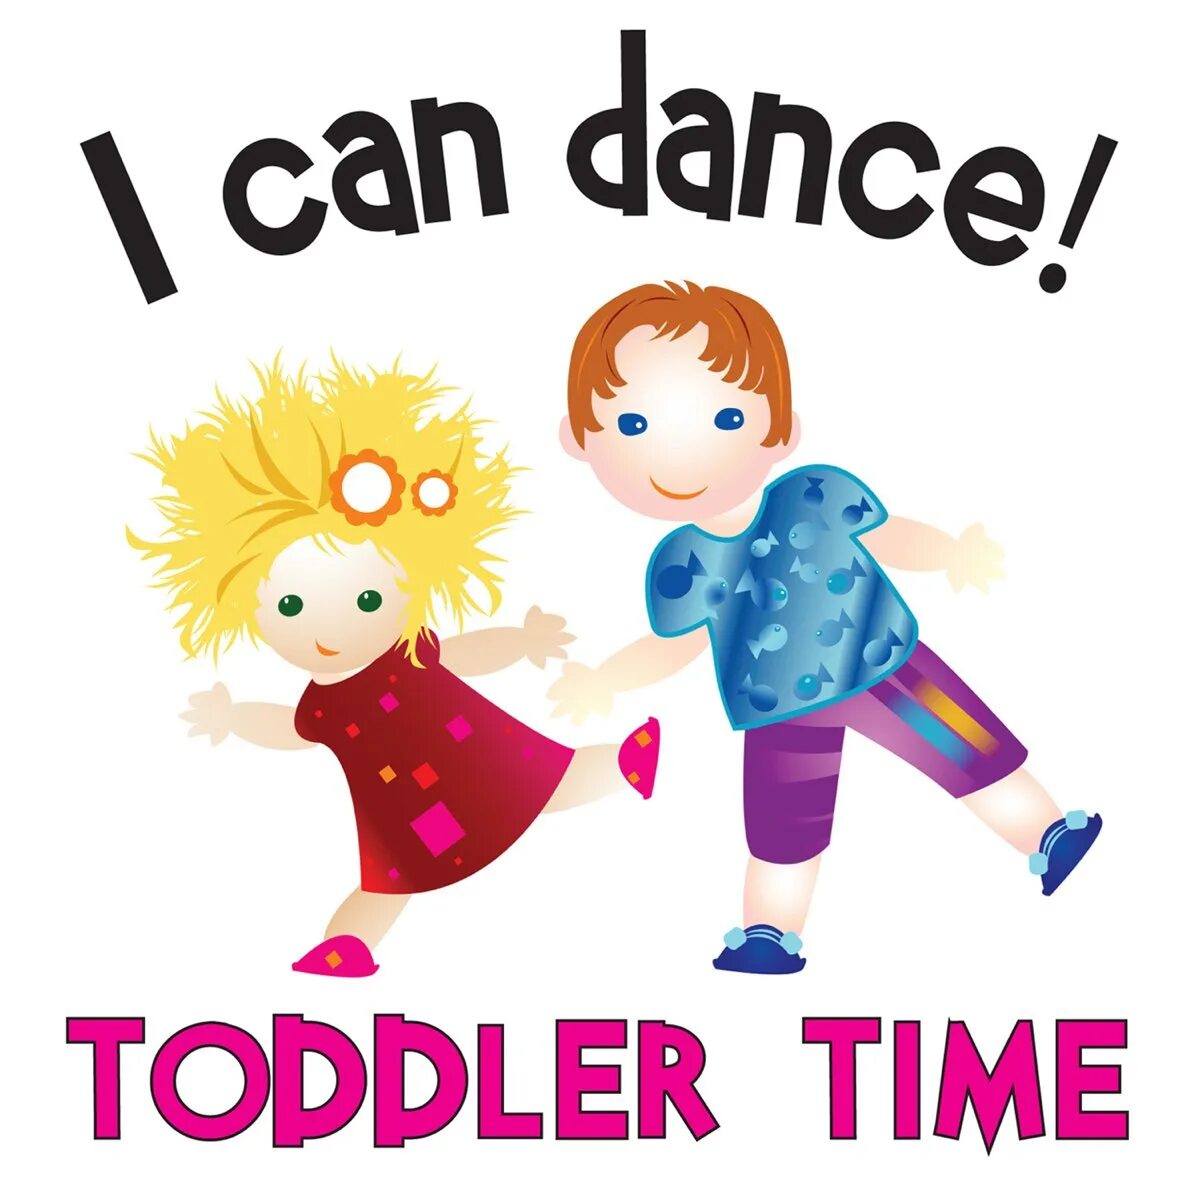 2 they like dancing. Dance на английском. Картинки i can. I can Dance для дошкольников. Sing and Dance рисунок для детей.